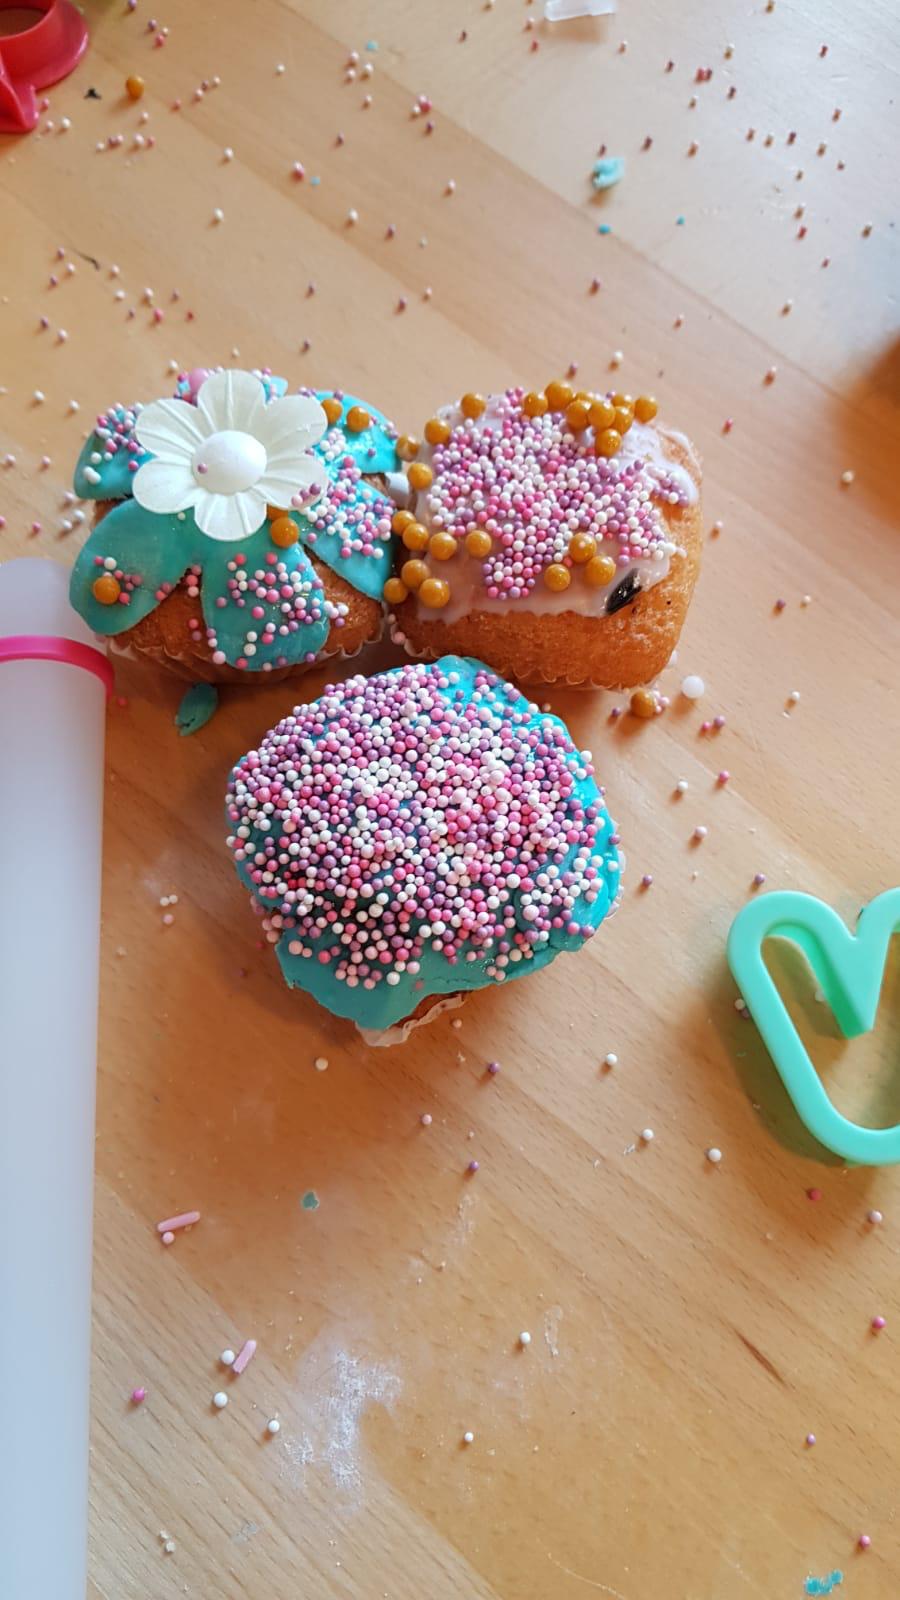  BSA activiteit: Cupcakes versieren